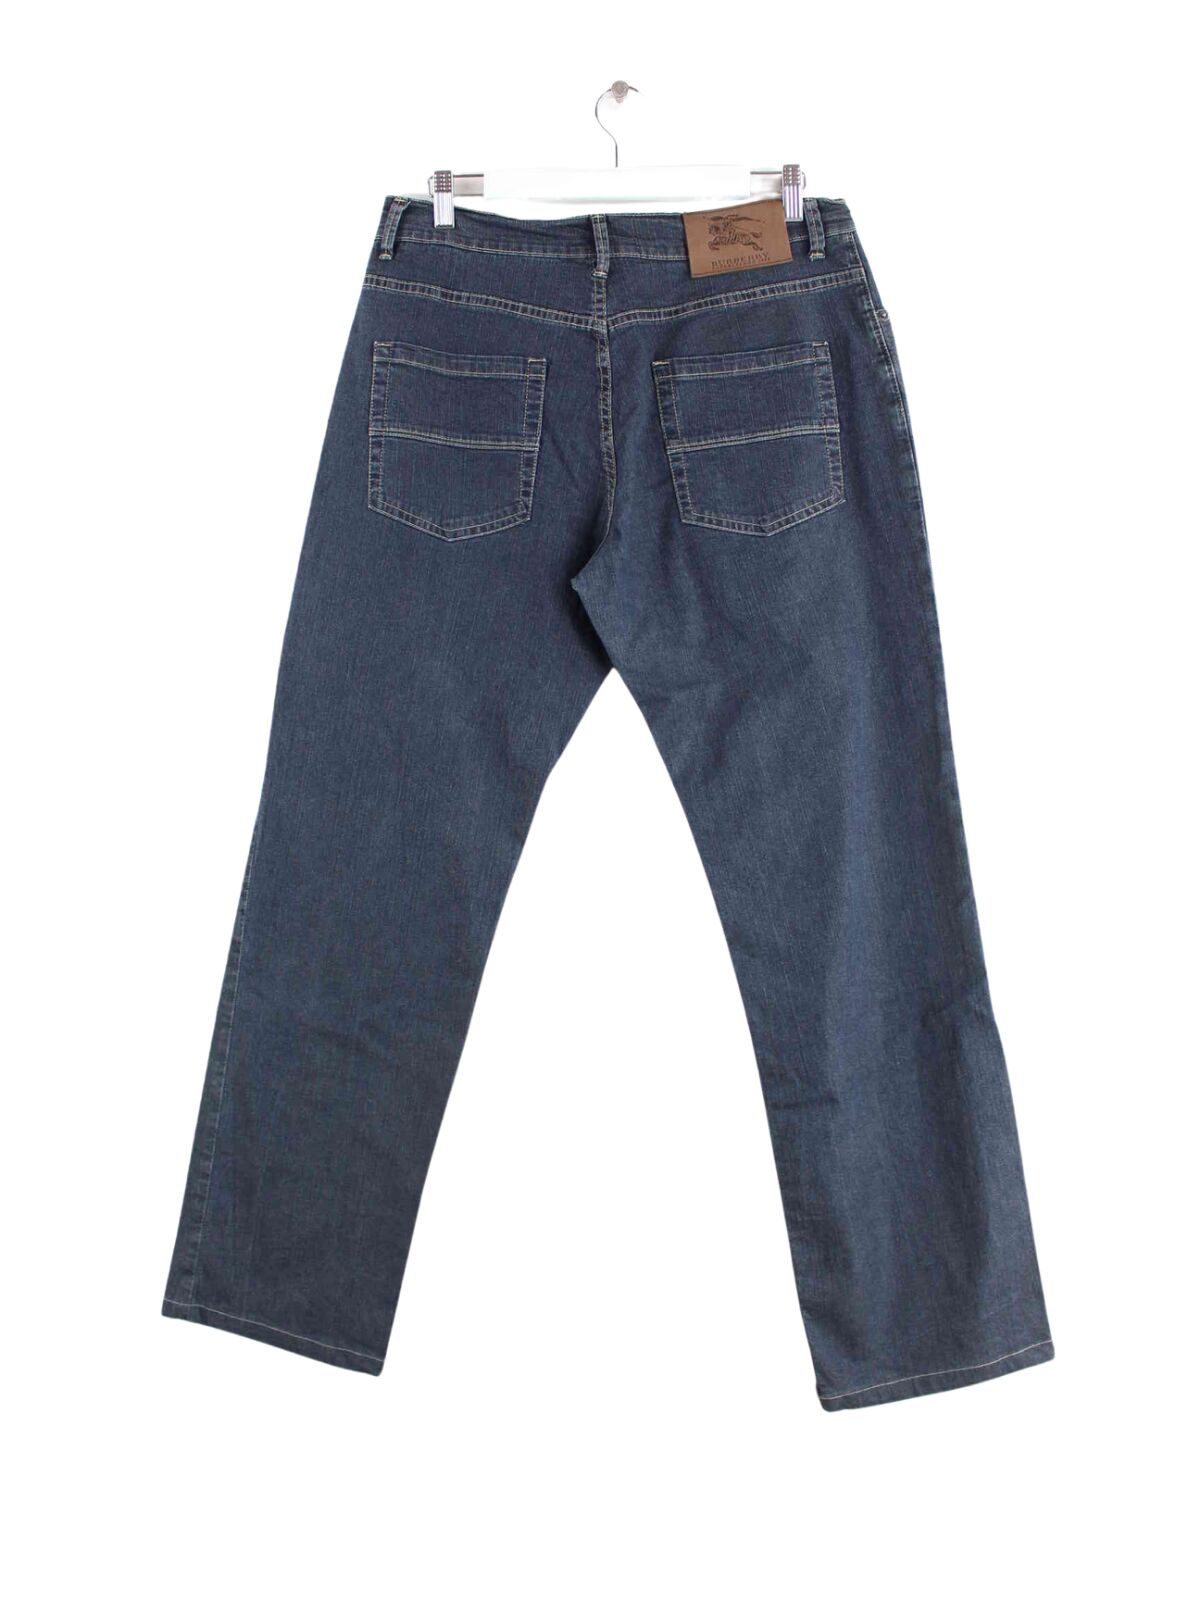 Burberry Jeans Blau W30 L30 (back image)